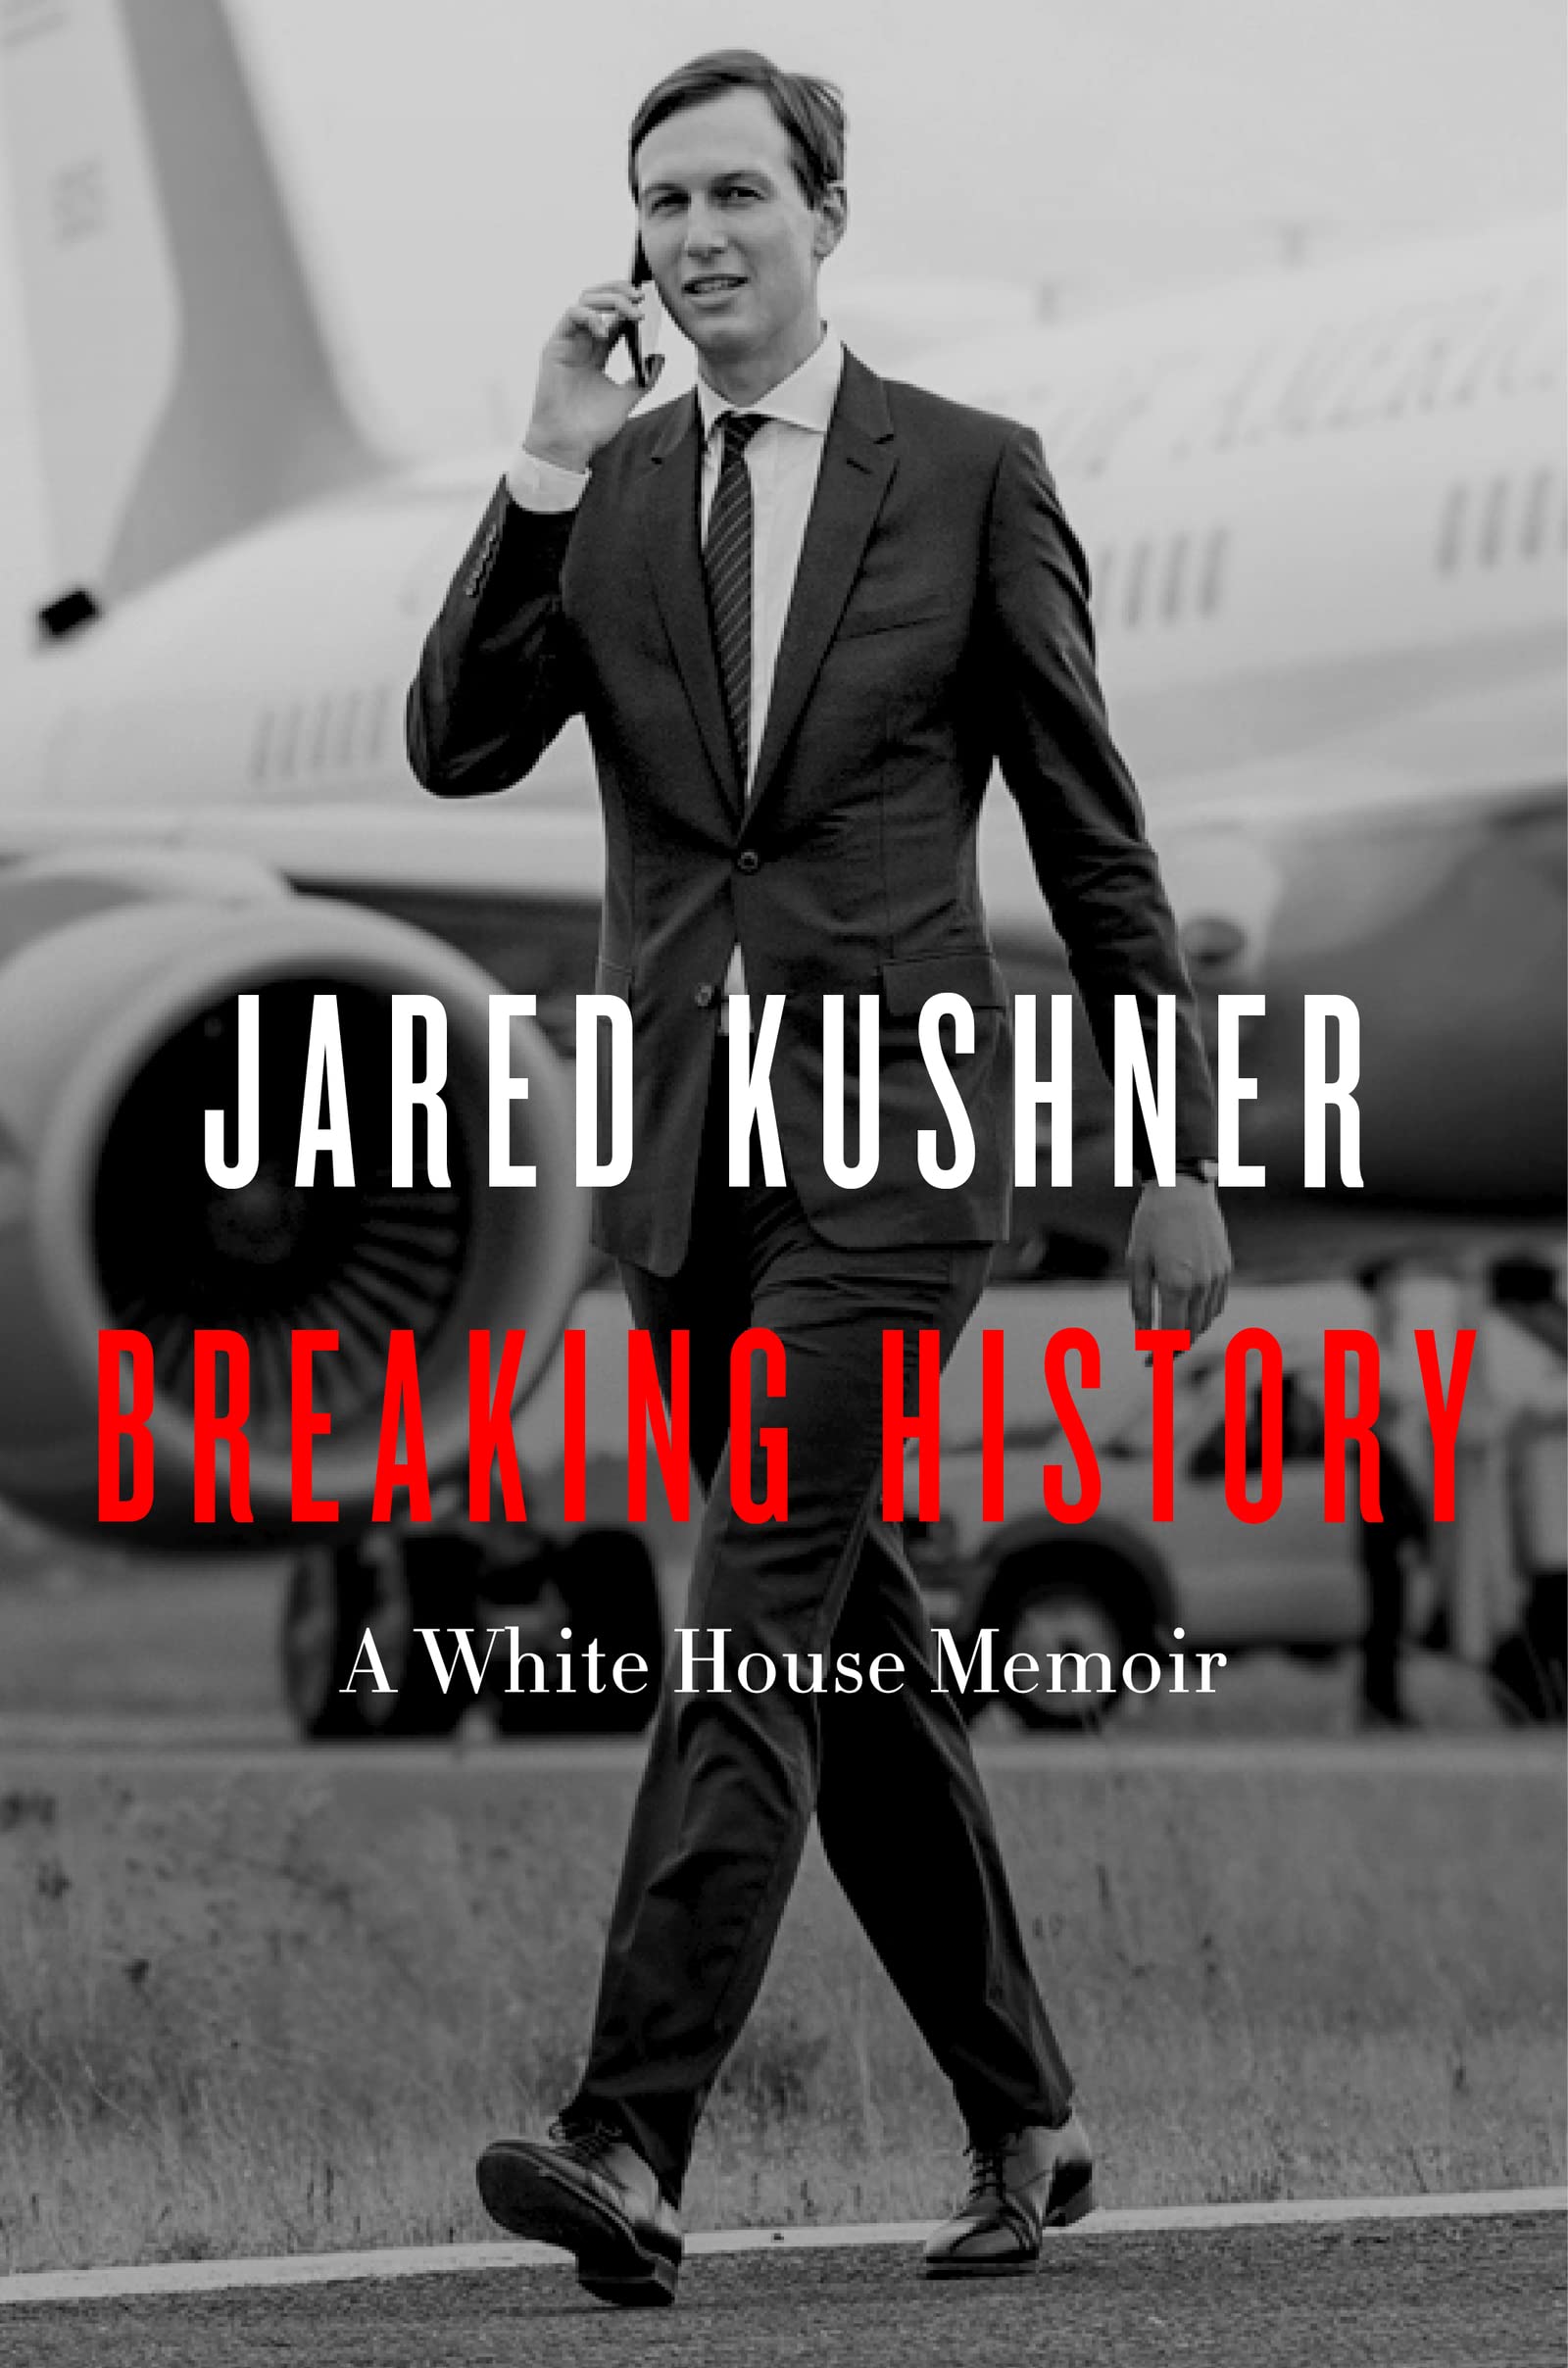 Jared Kushner Breaking History book